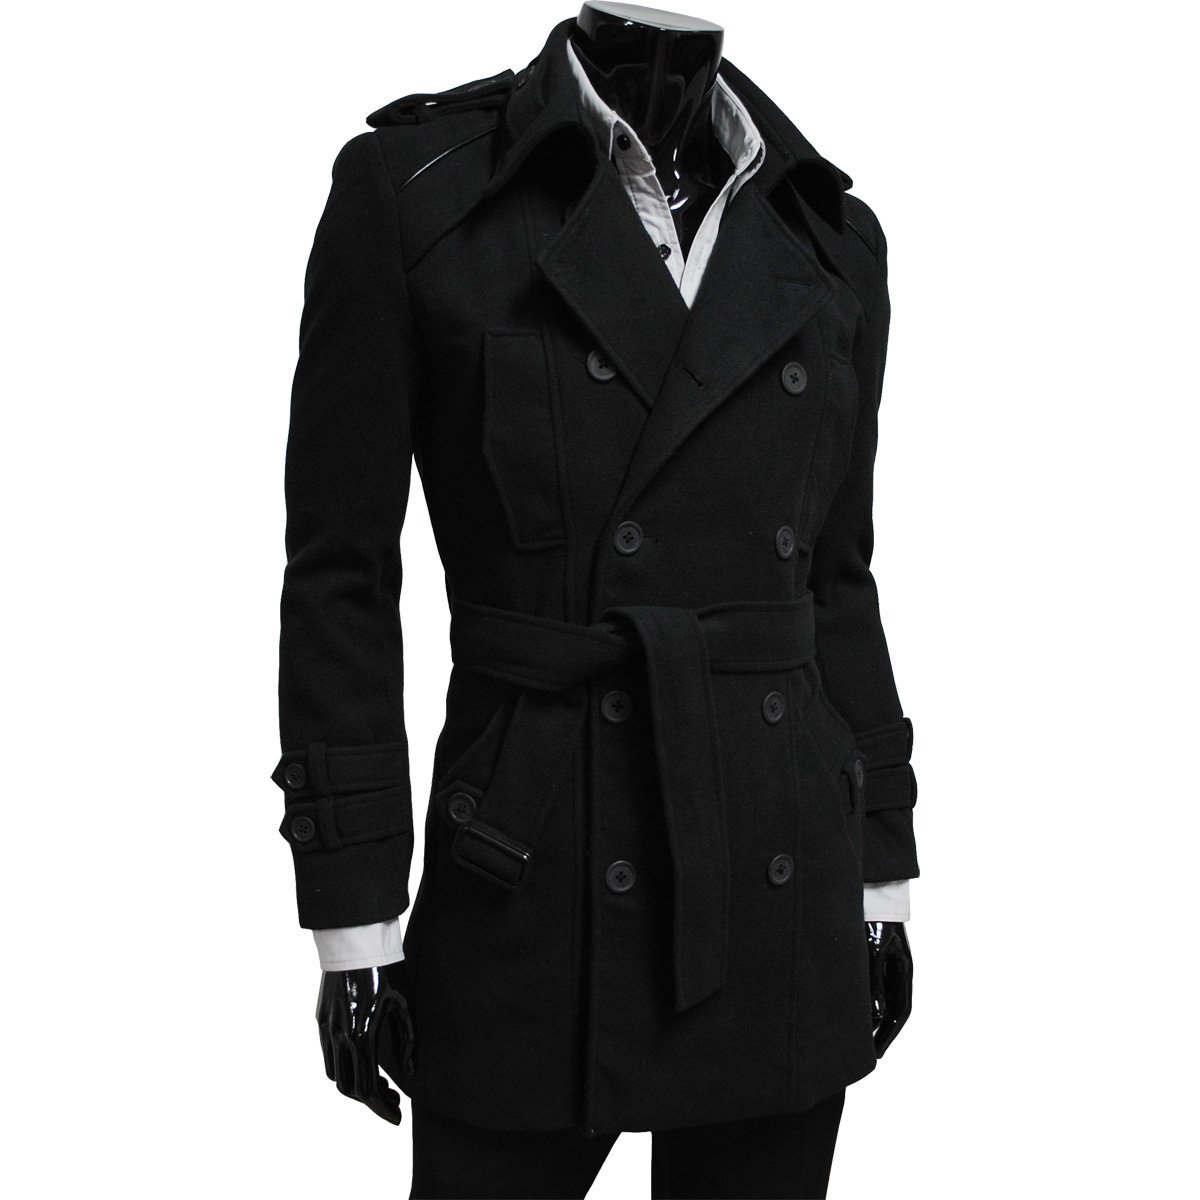 black trench coat, trench coats for men, leather trench coat, hfcpozv